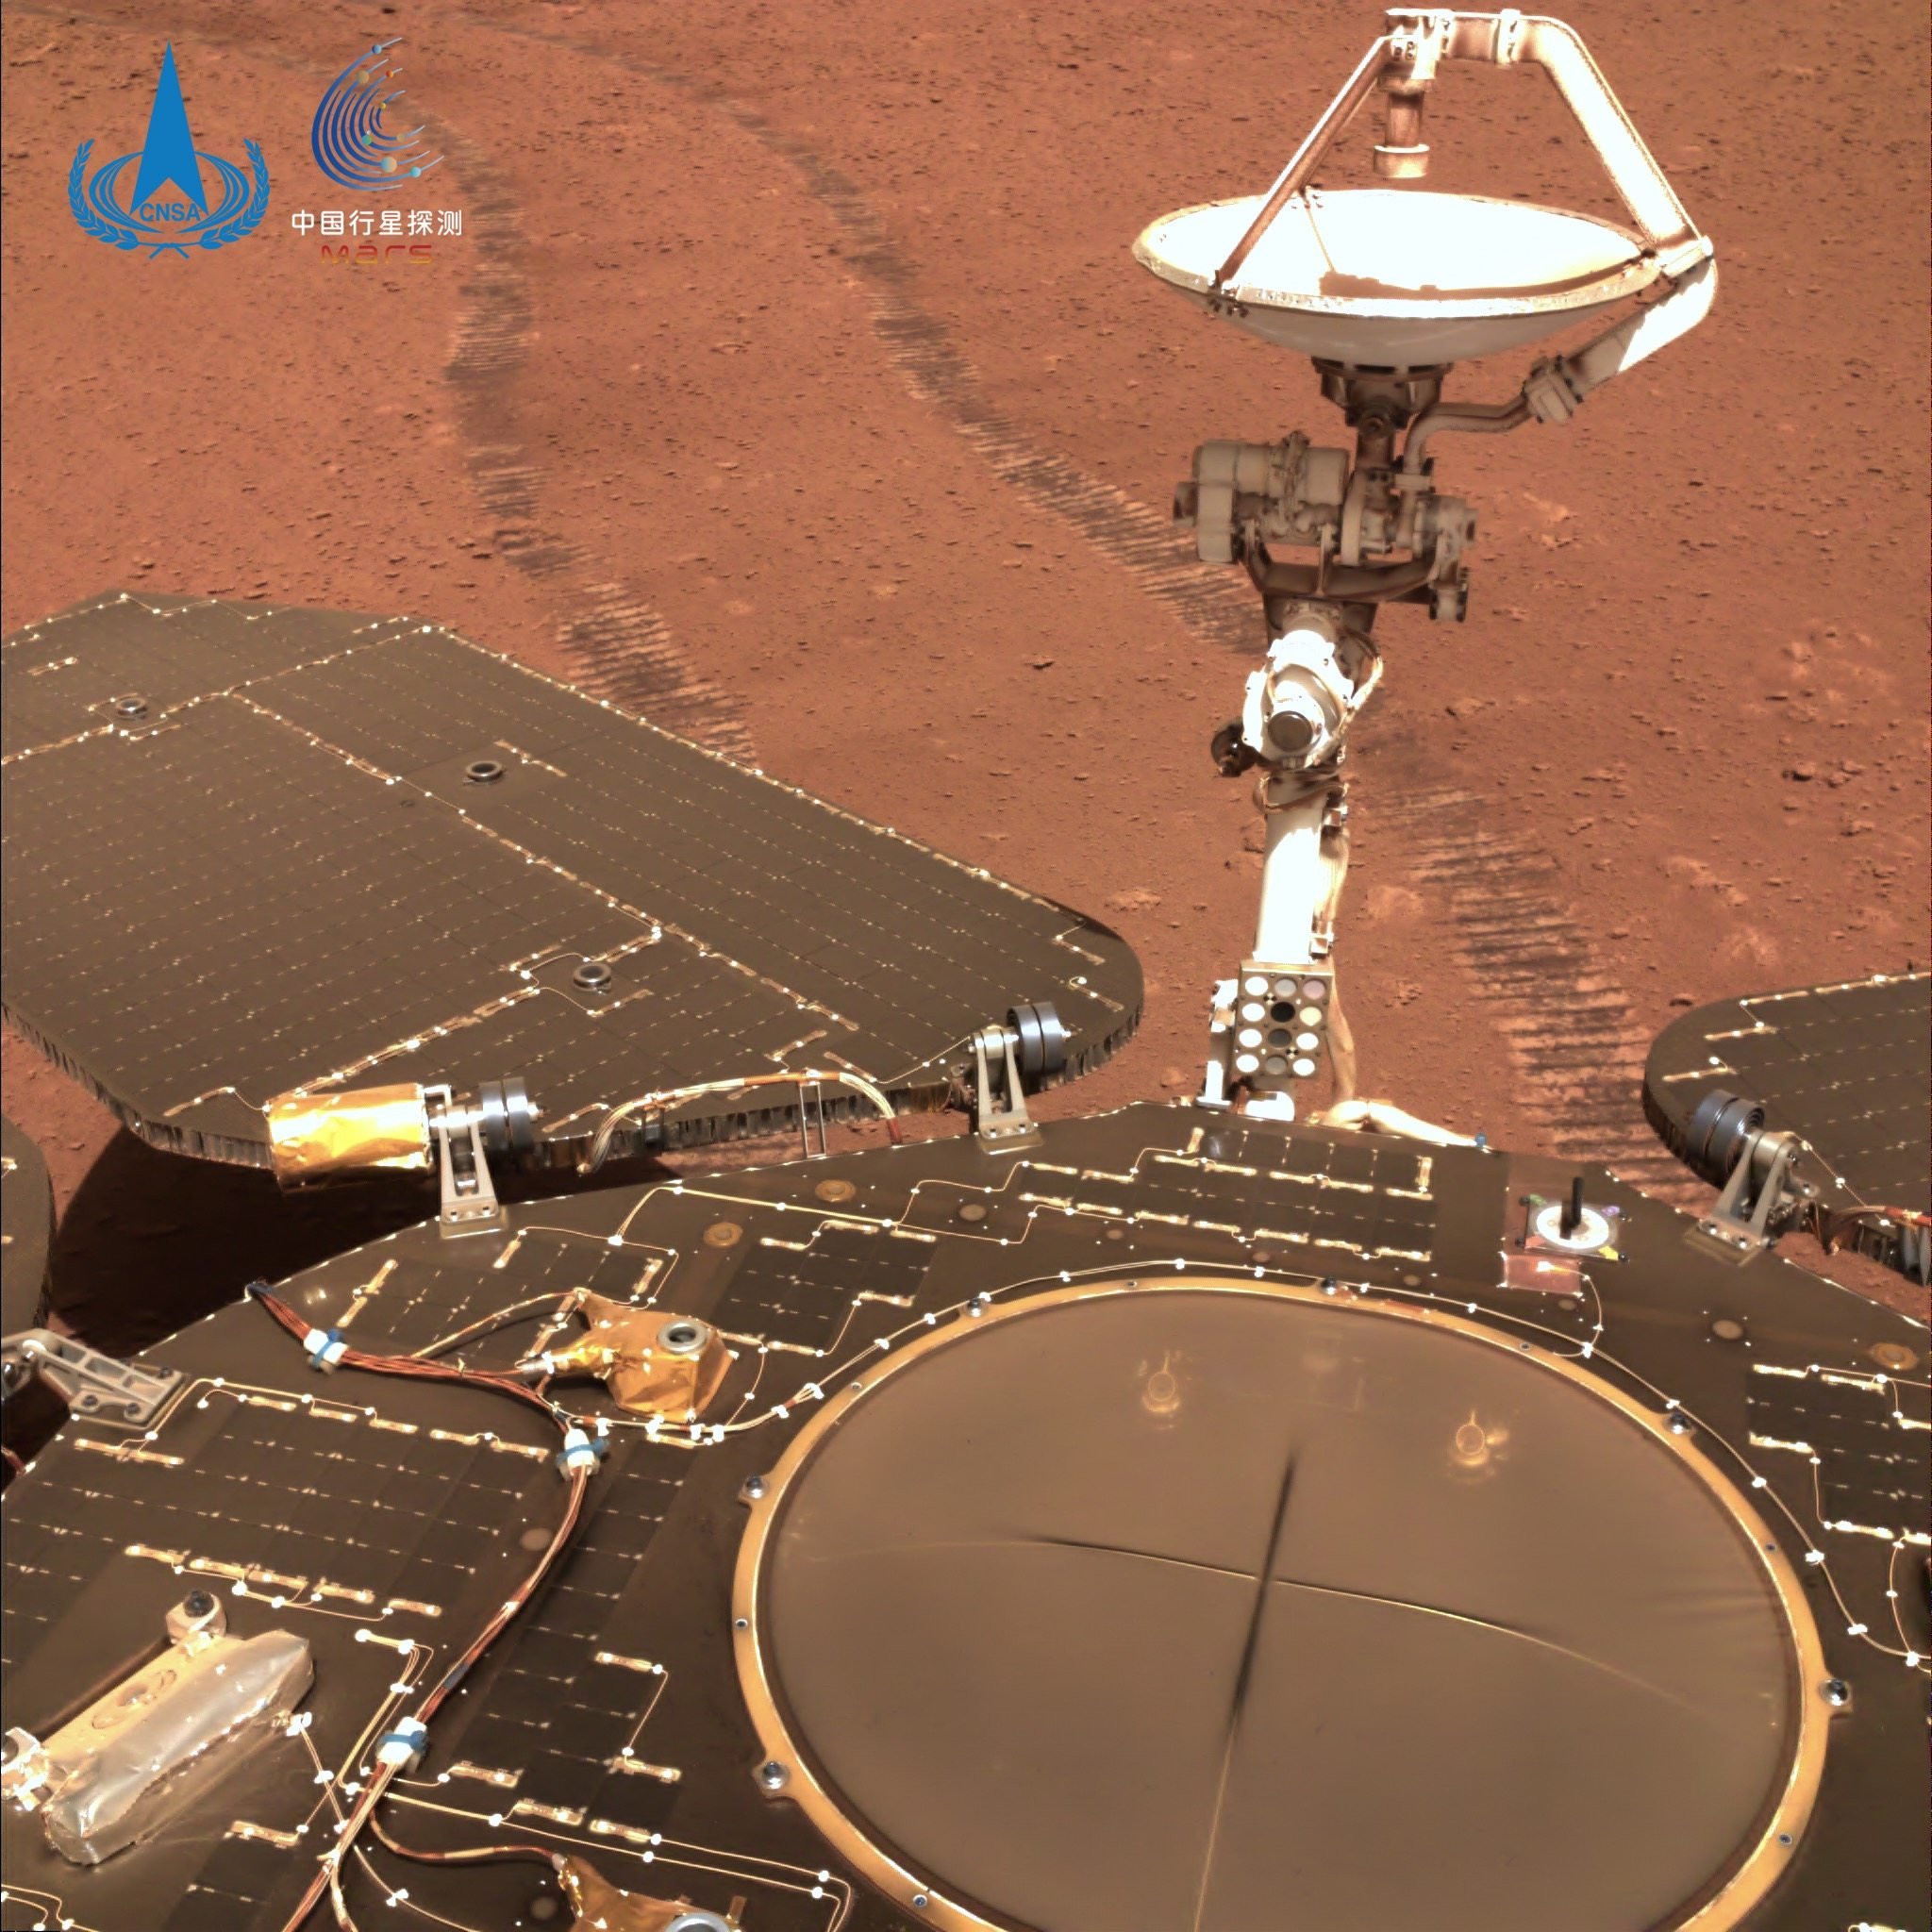 A ‘selfie’ image of China’s Mars rover, Zhu Rong. Photo: CNSA